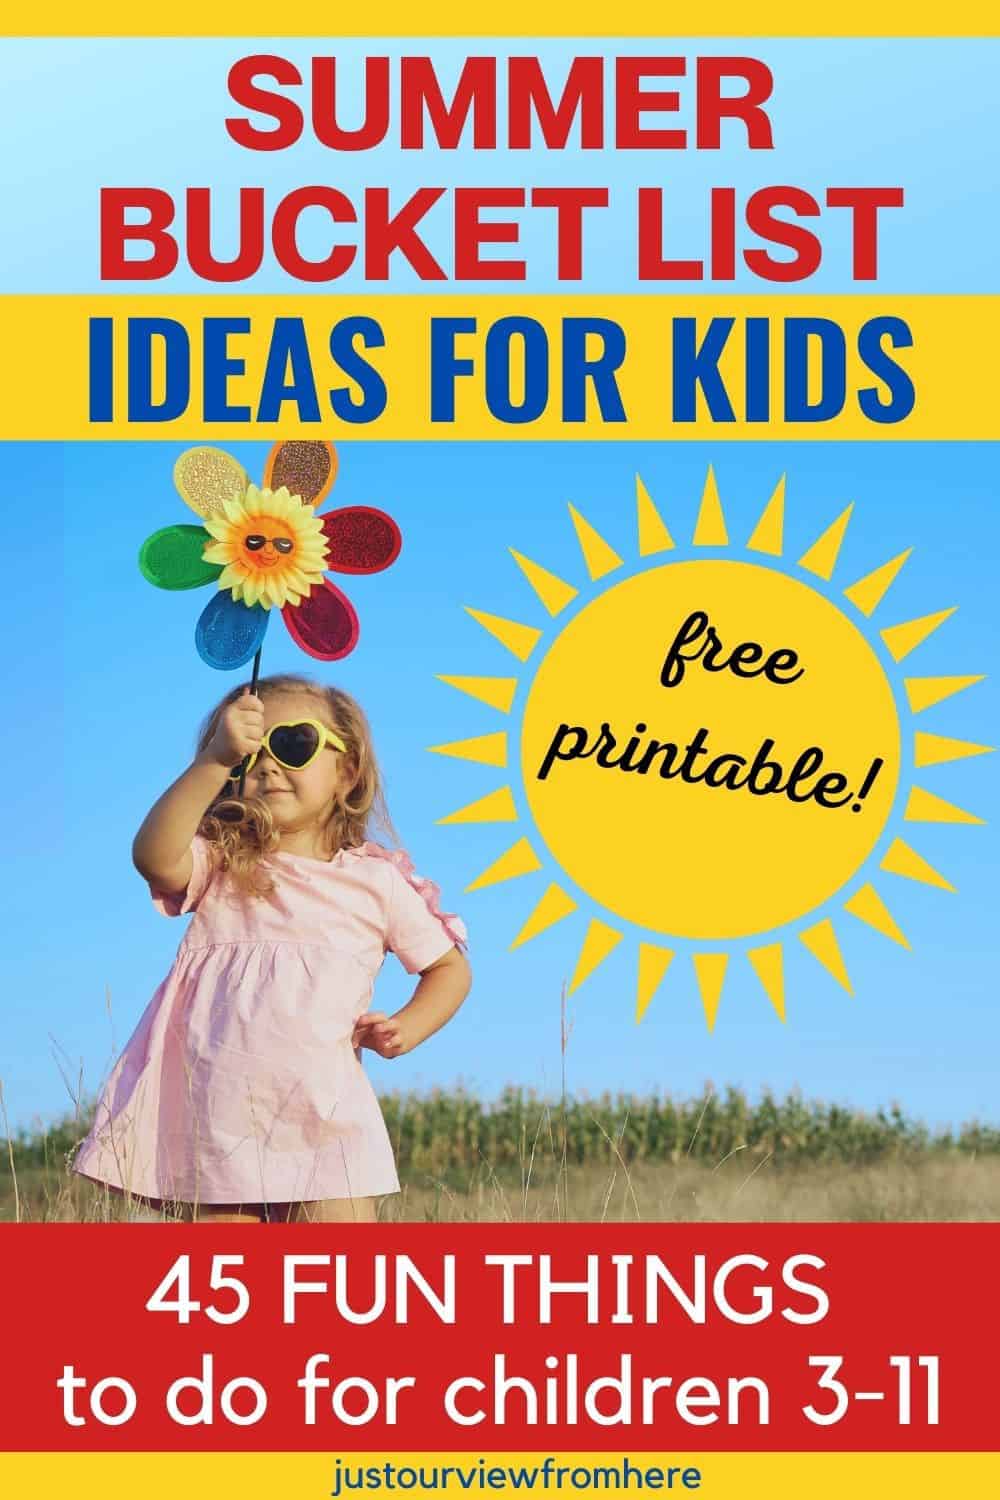 LITTLE GIRL HOLDING FLOWER PINWHEEL text overlay summer bucket list ideas 45 fun things to do for children 3-11, free printable